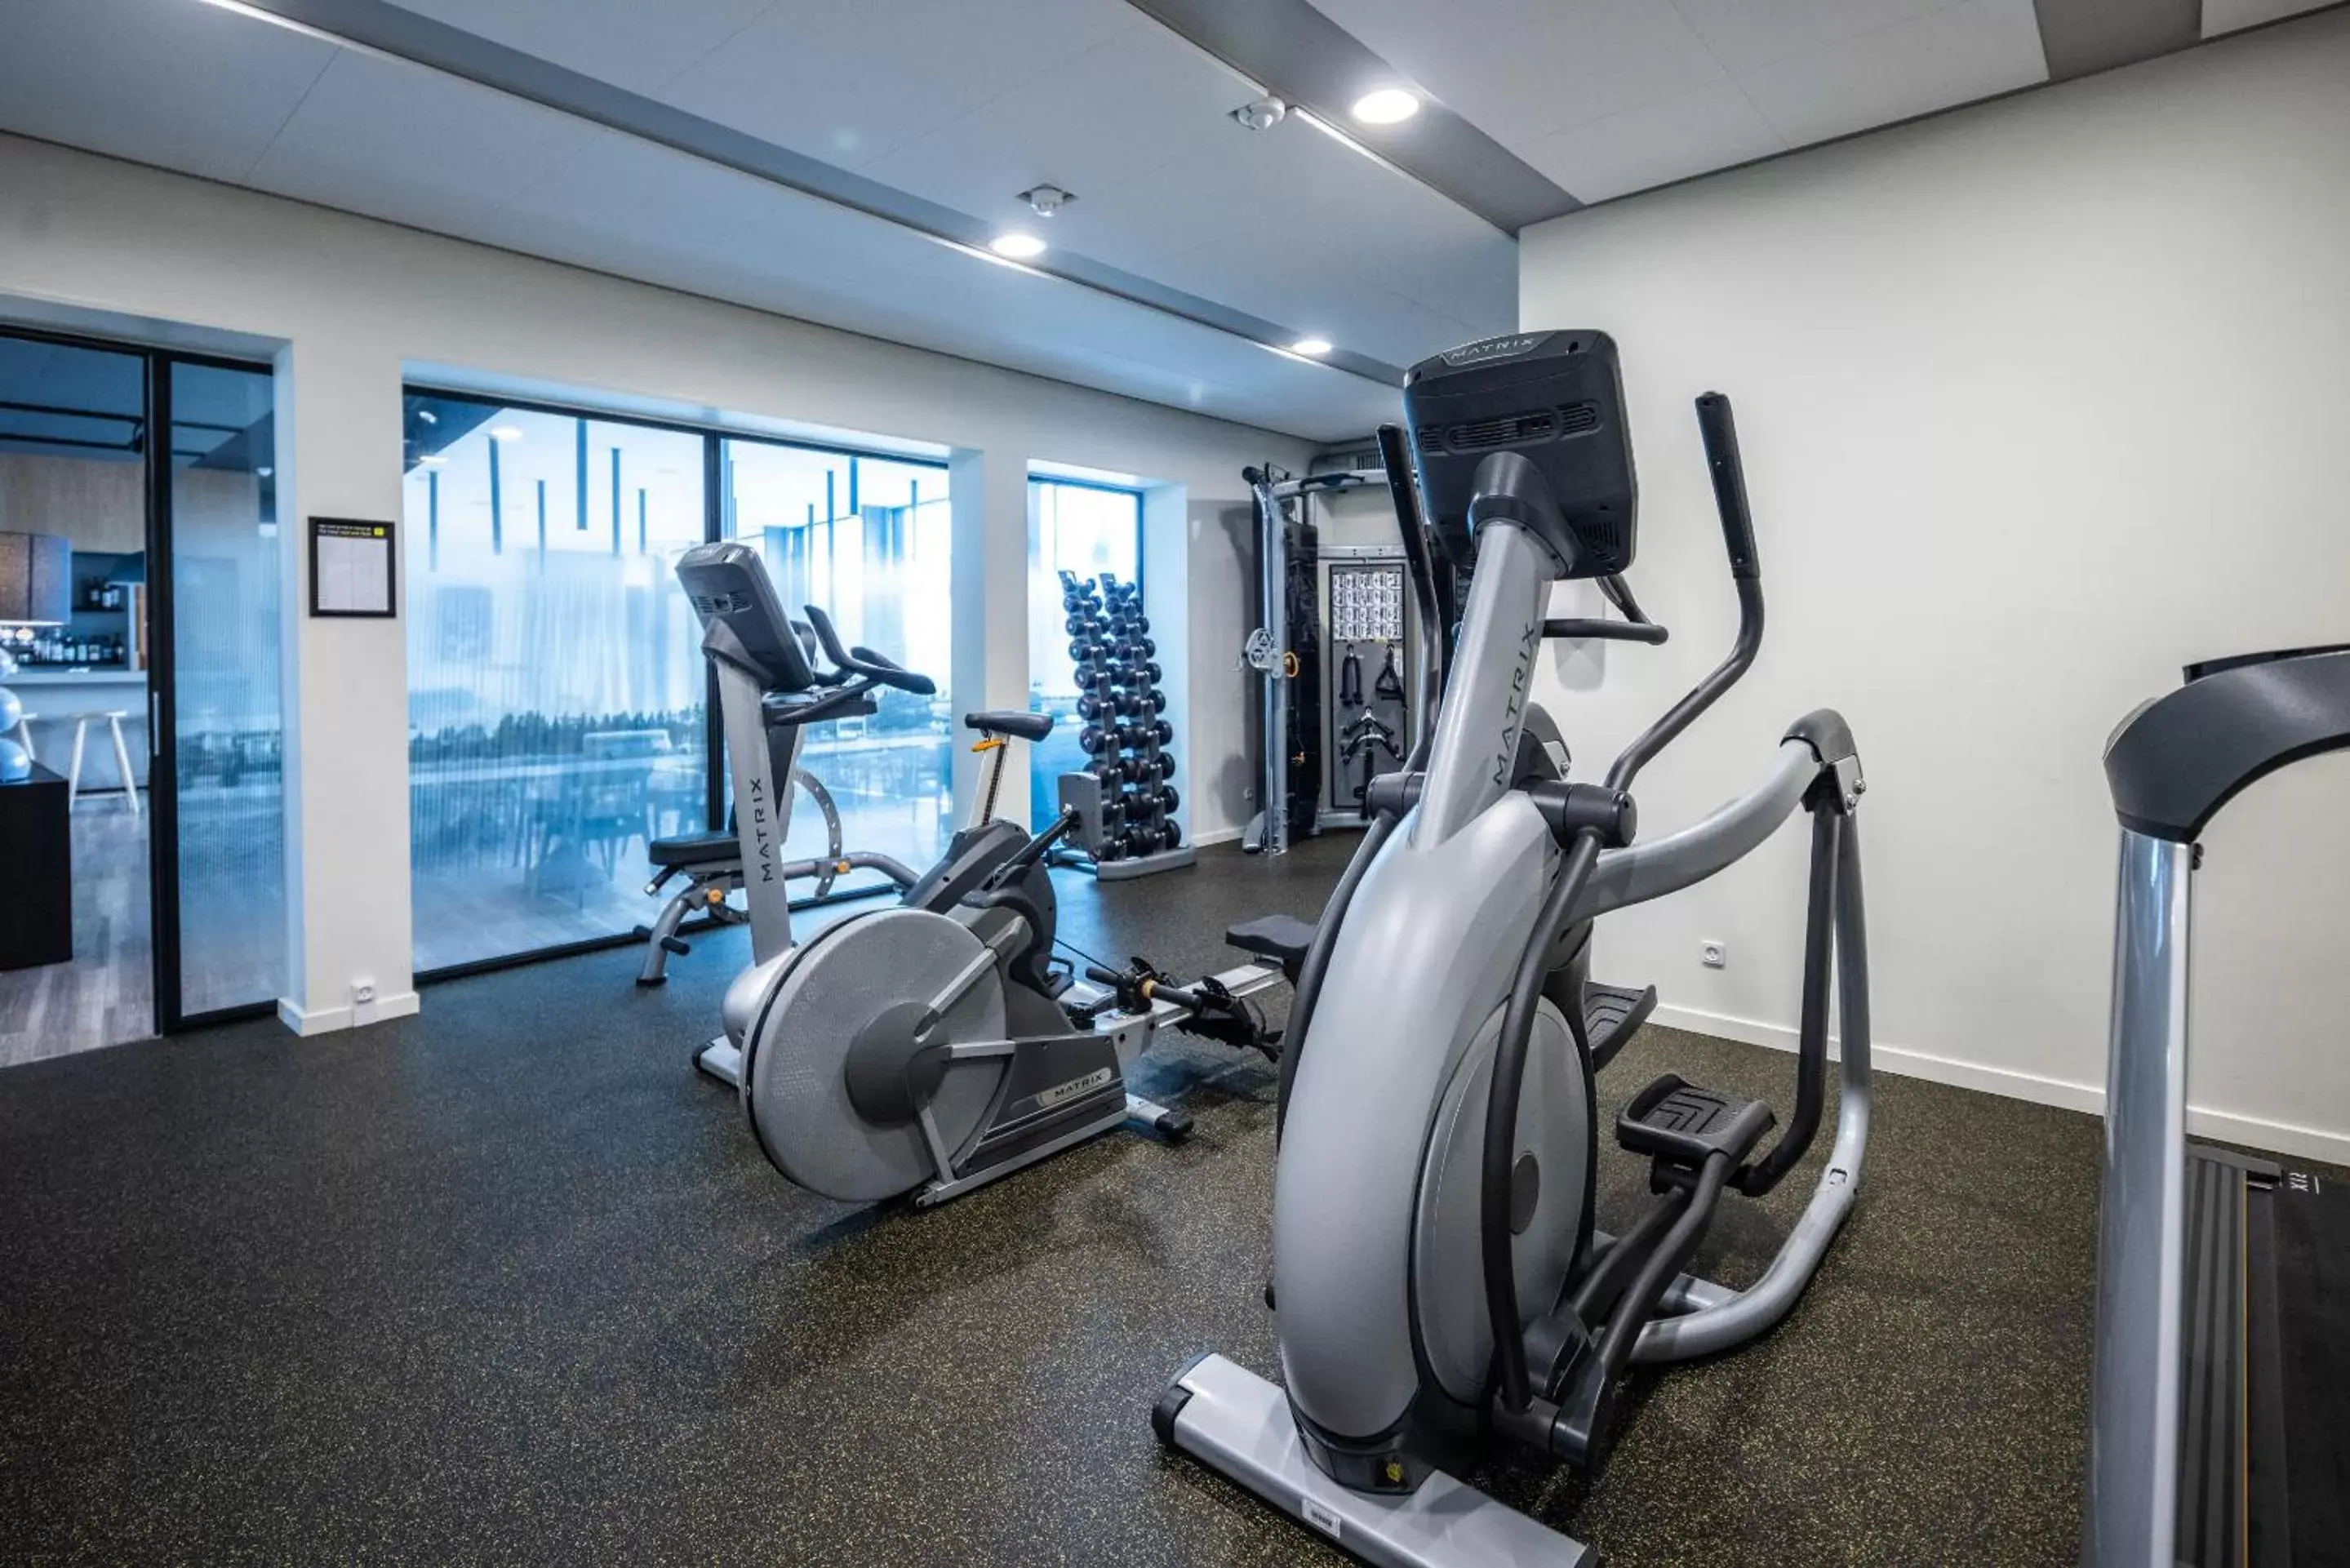 Fitness centre/facilities, Fitness Center/Facilities in Billund Airport Hotel